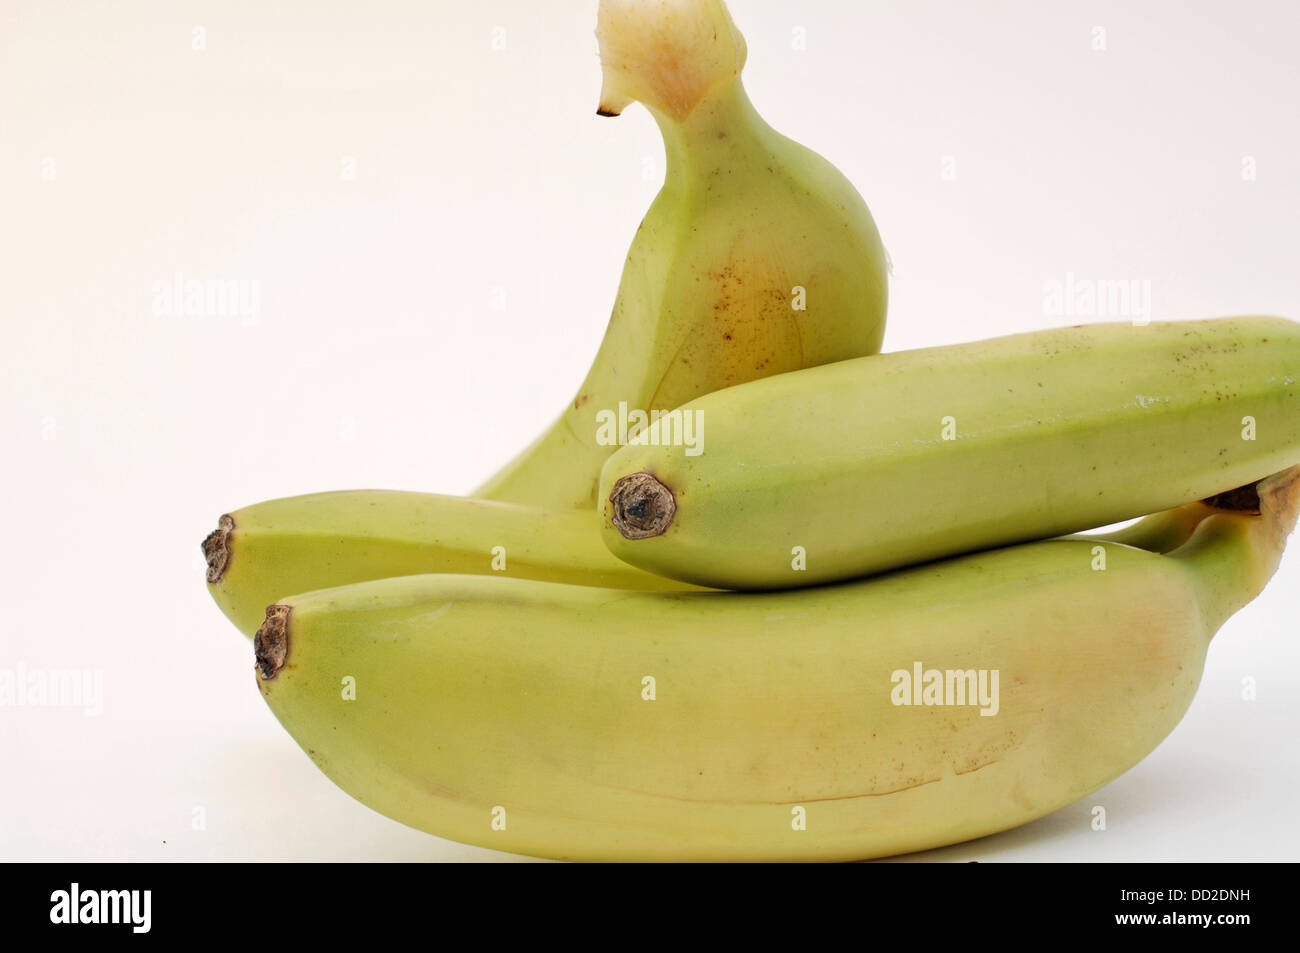 Mature banane fresche Foto Stock